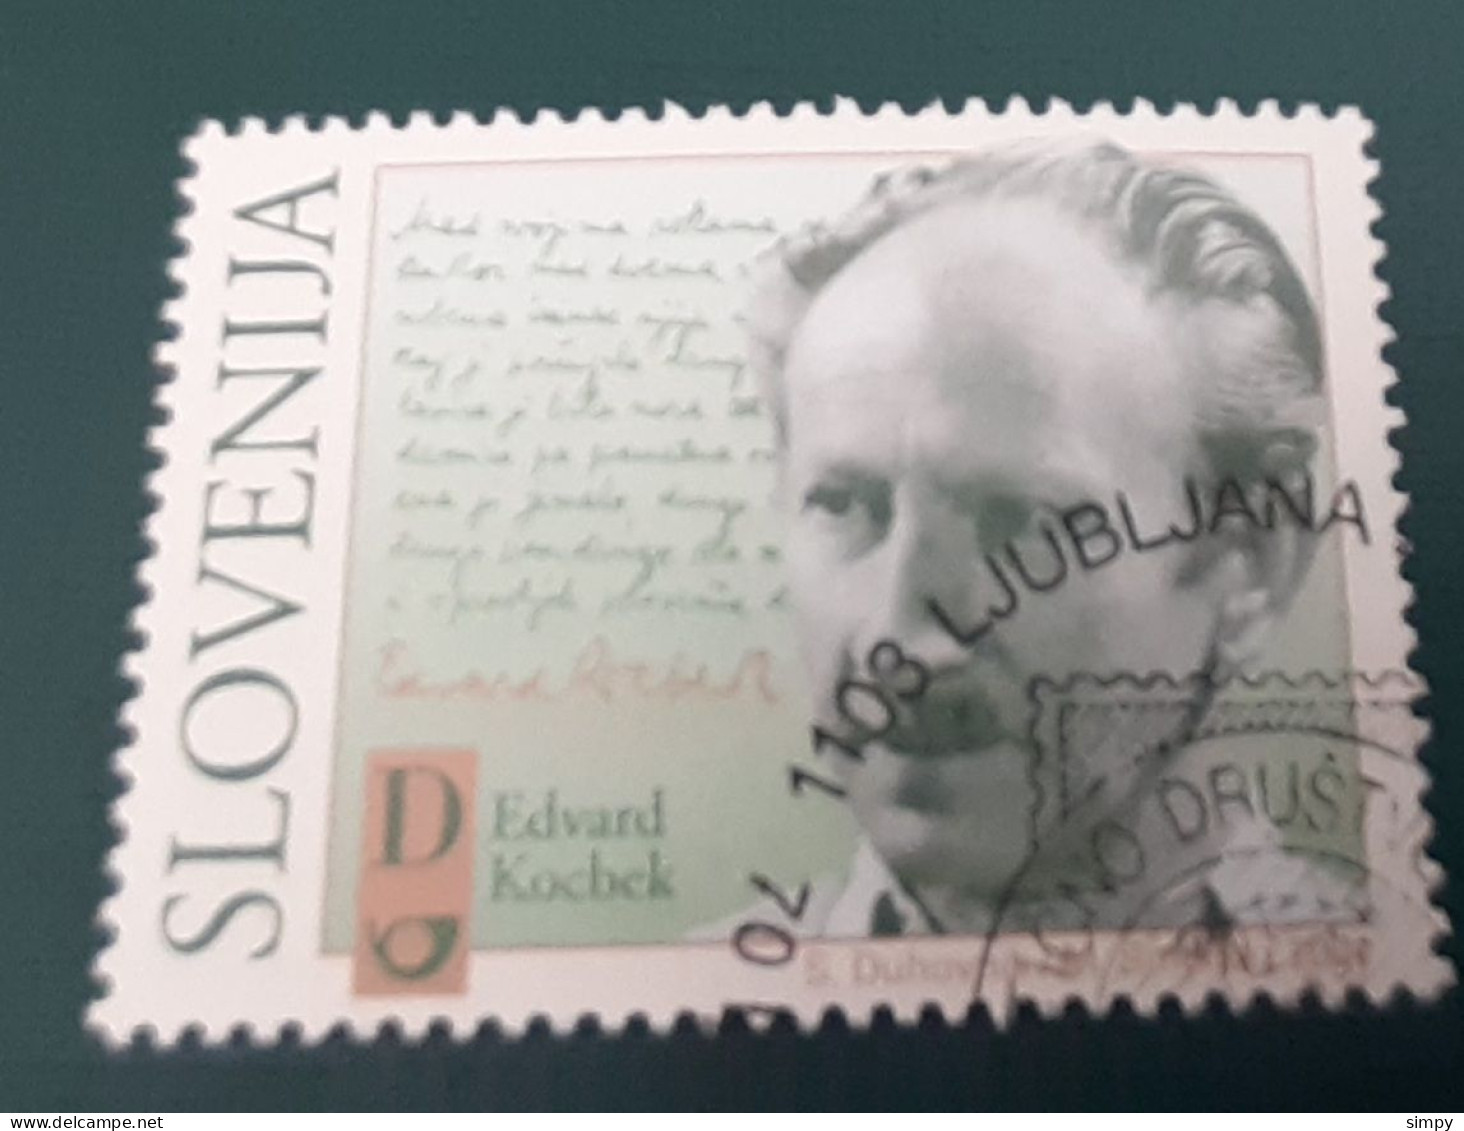 SLOVENIA 2004 Edvard Kocbek Michel 455 Used Stamp - Slovenia